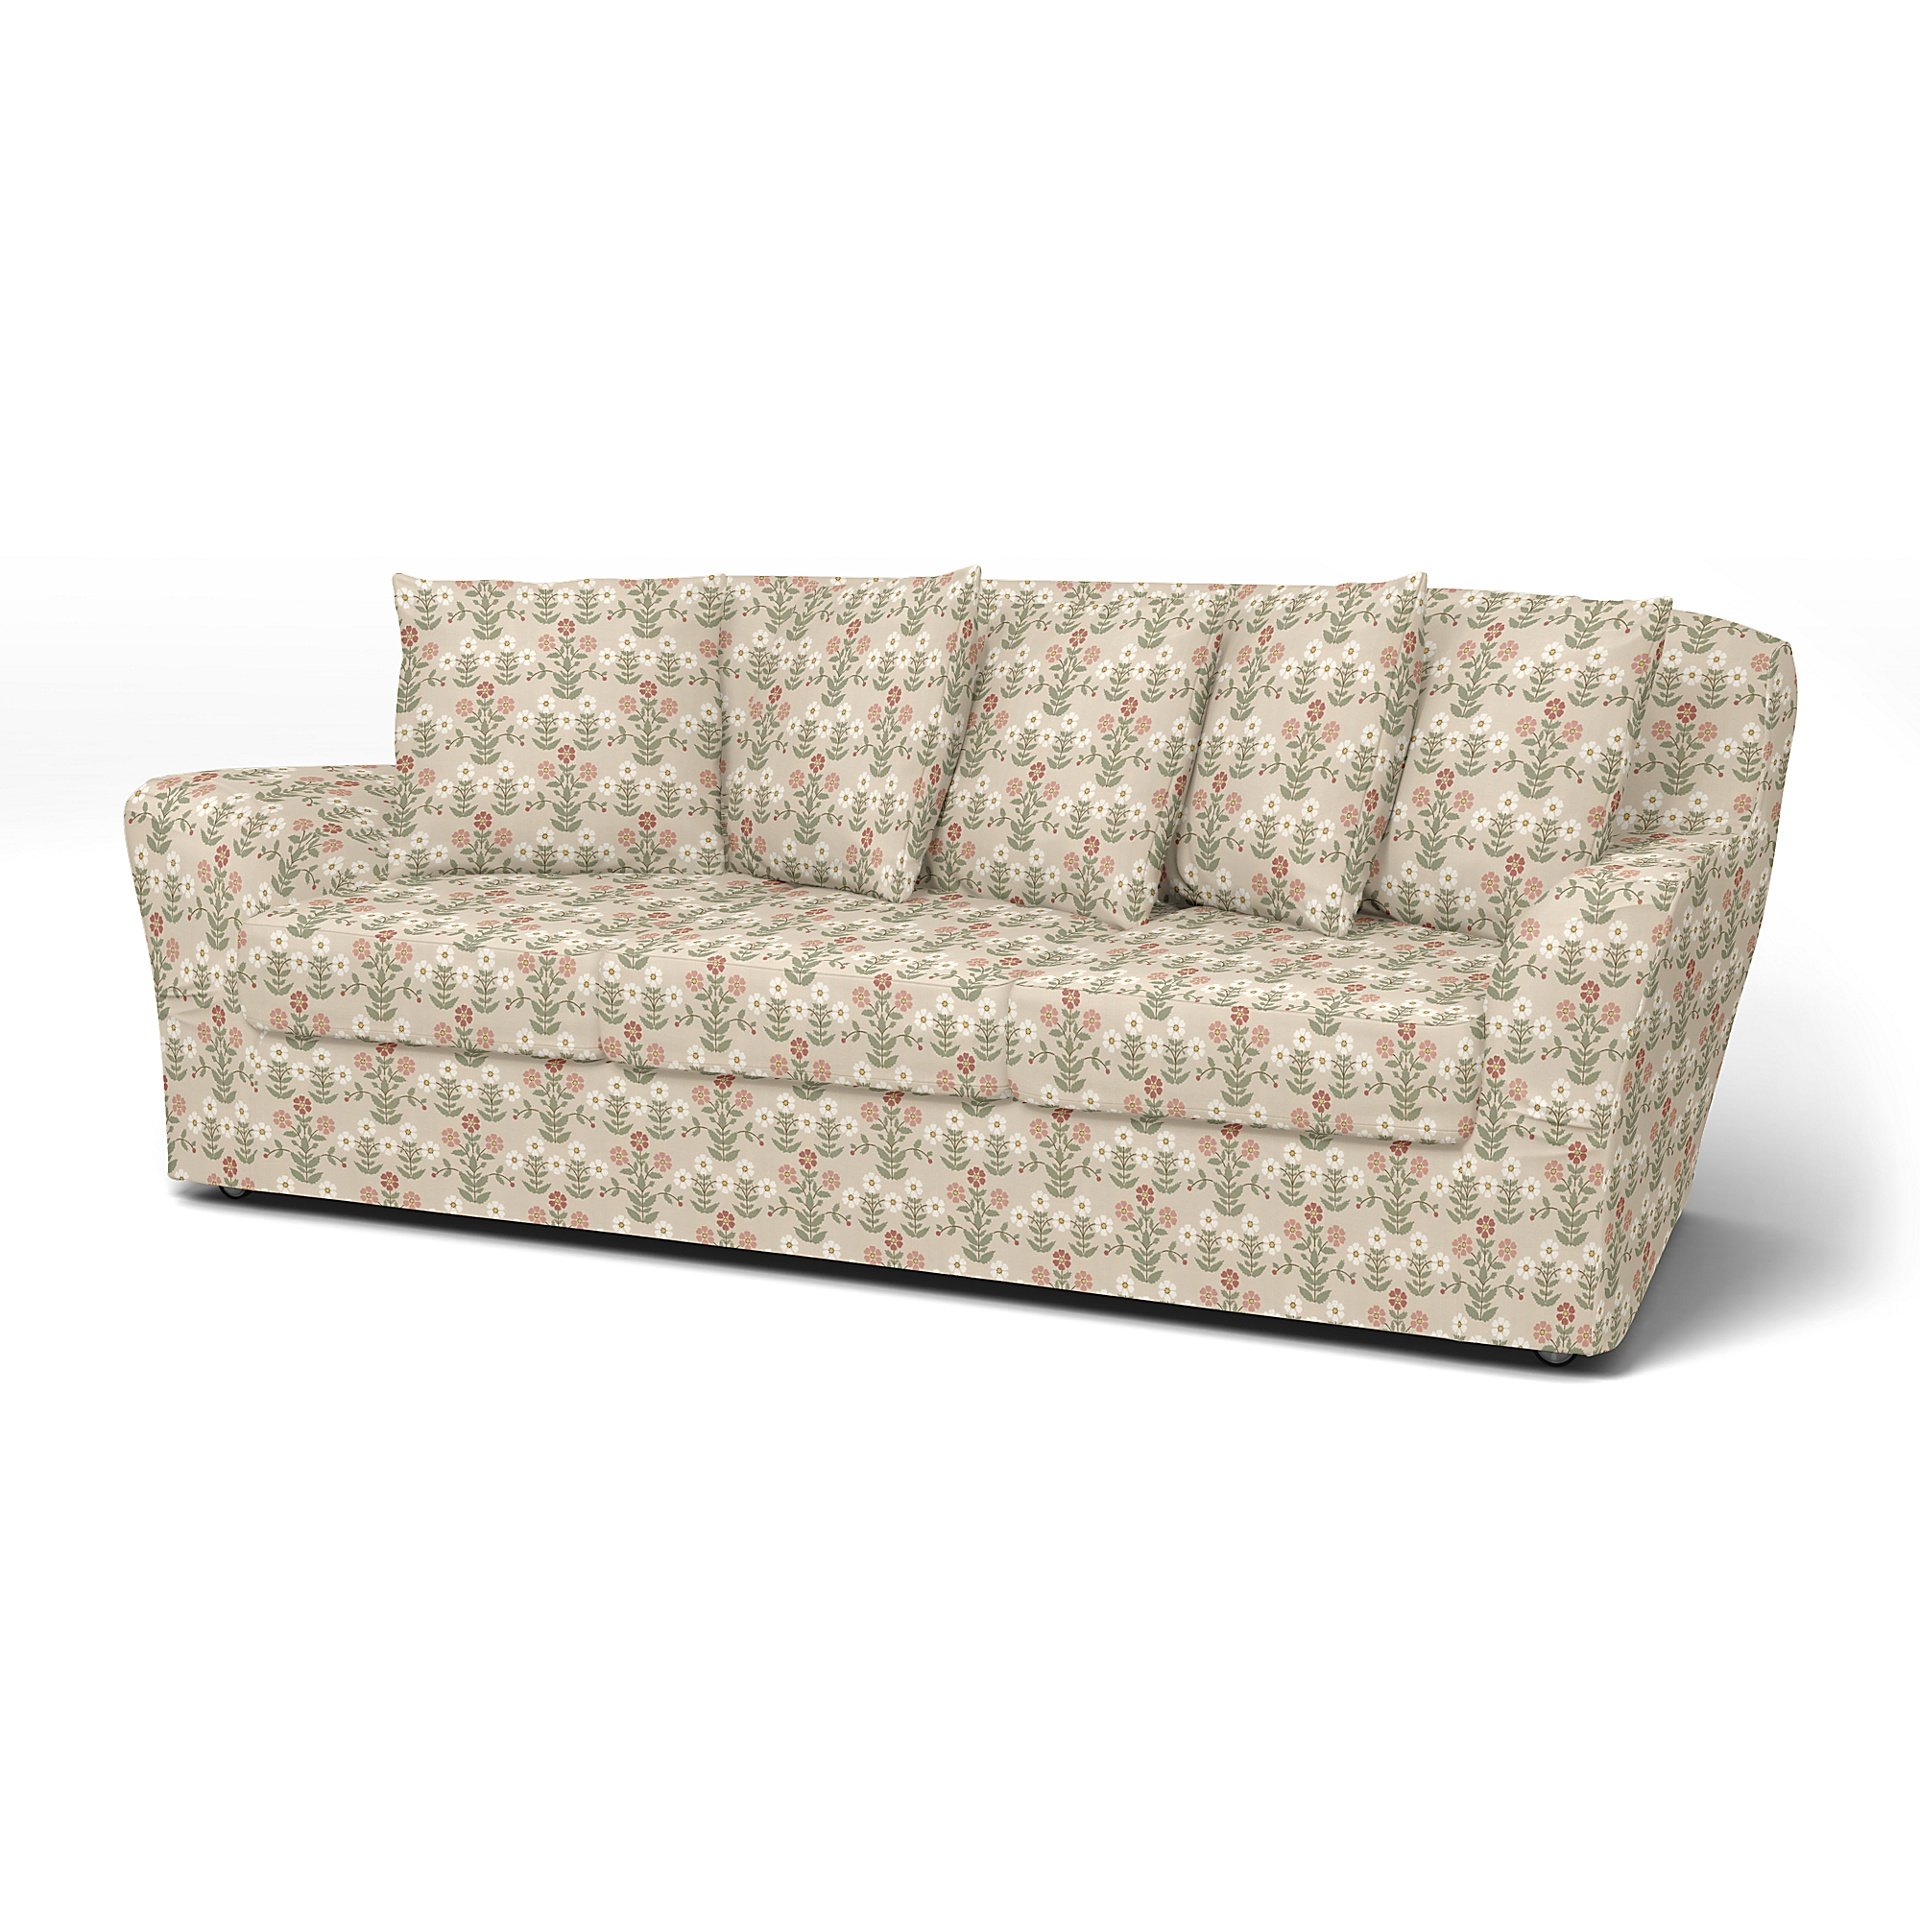 IKEA - Tomelilla 3 seater sofa, Pink Sippor, BEMZ x BORASTAPETER COLLECTION - Bemz